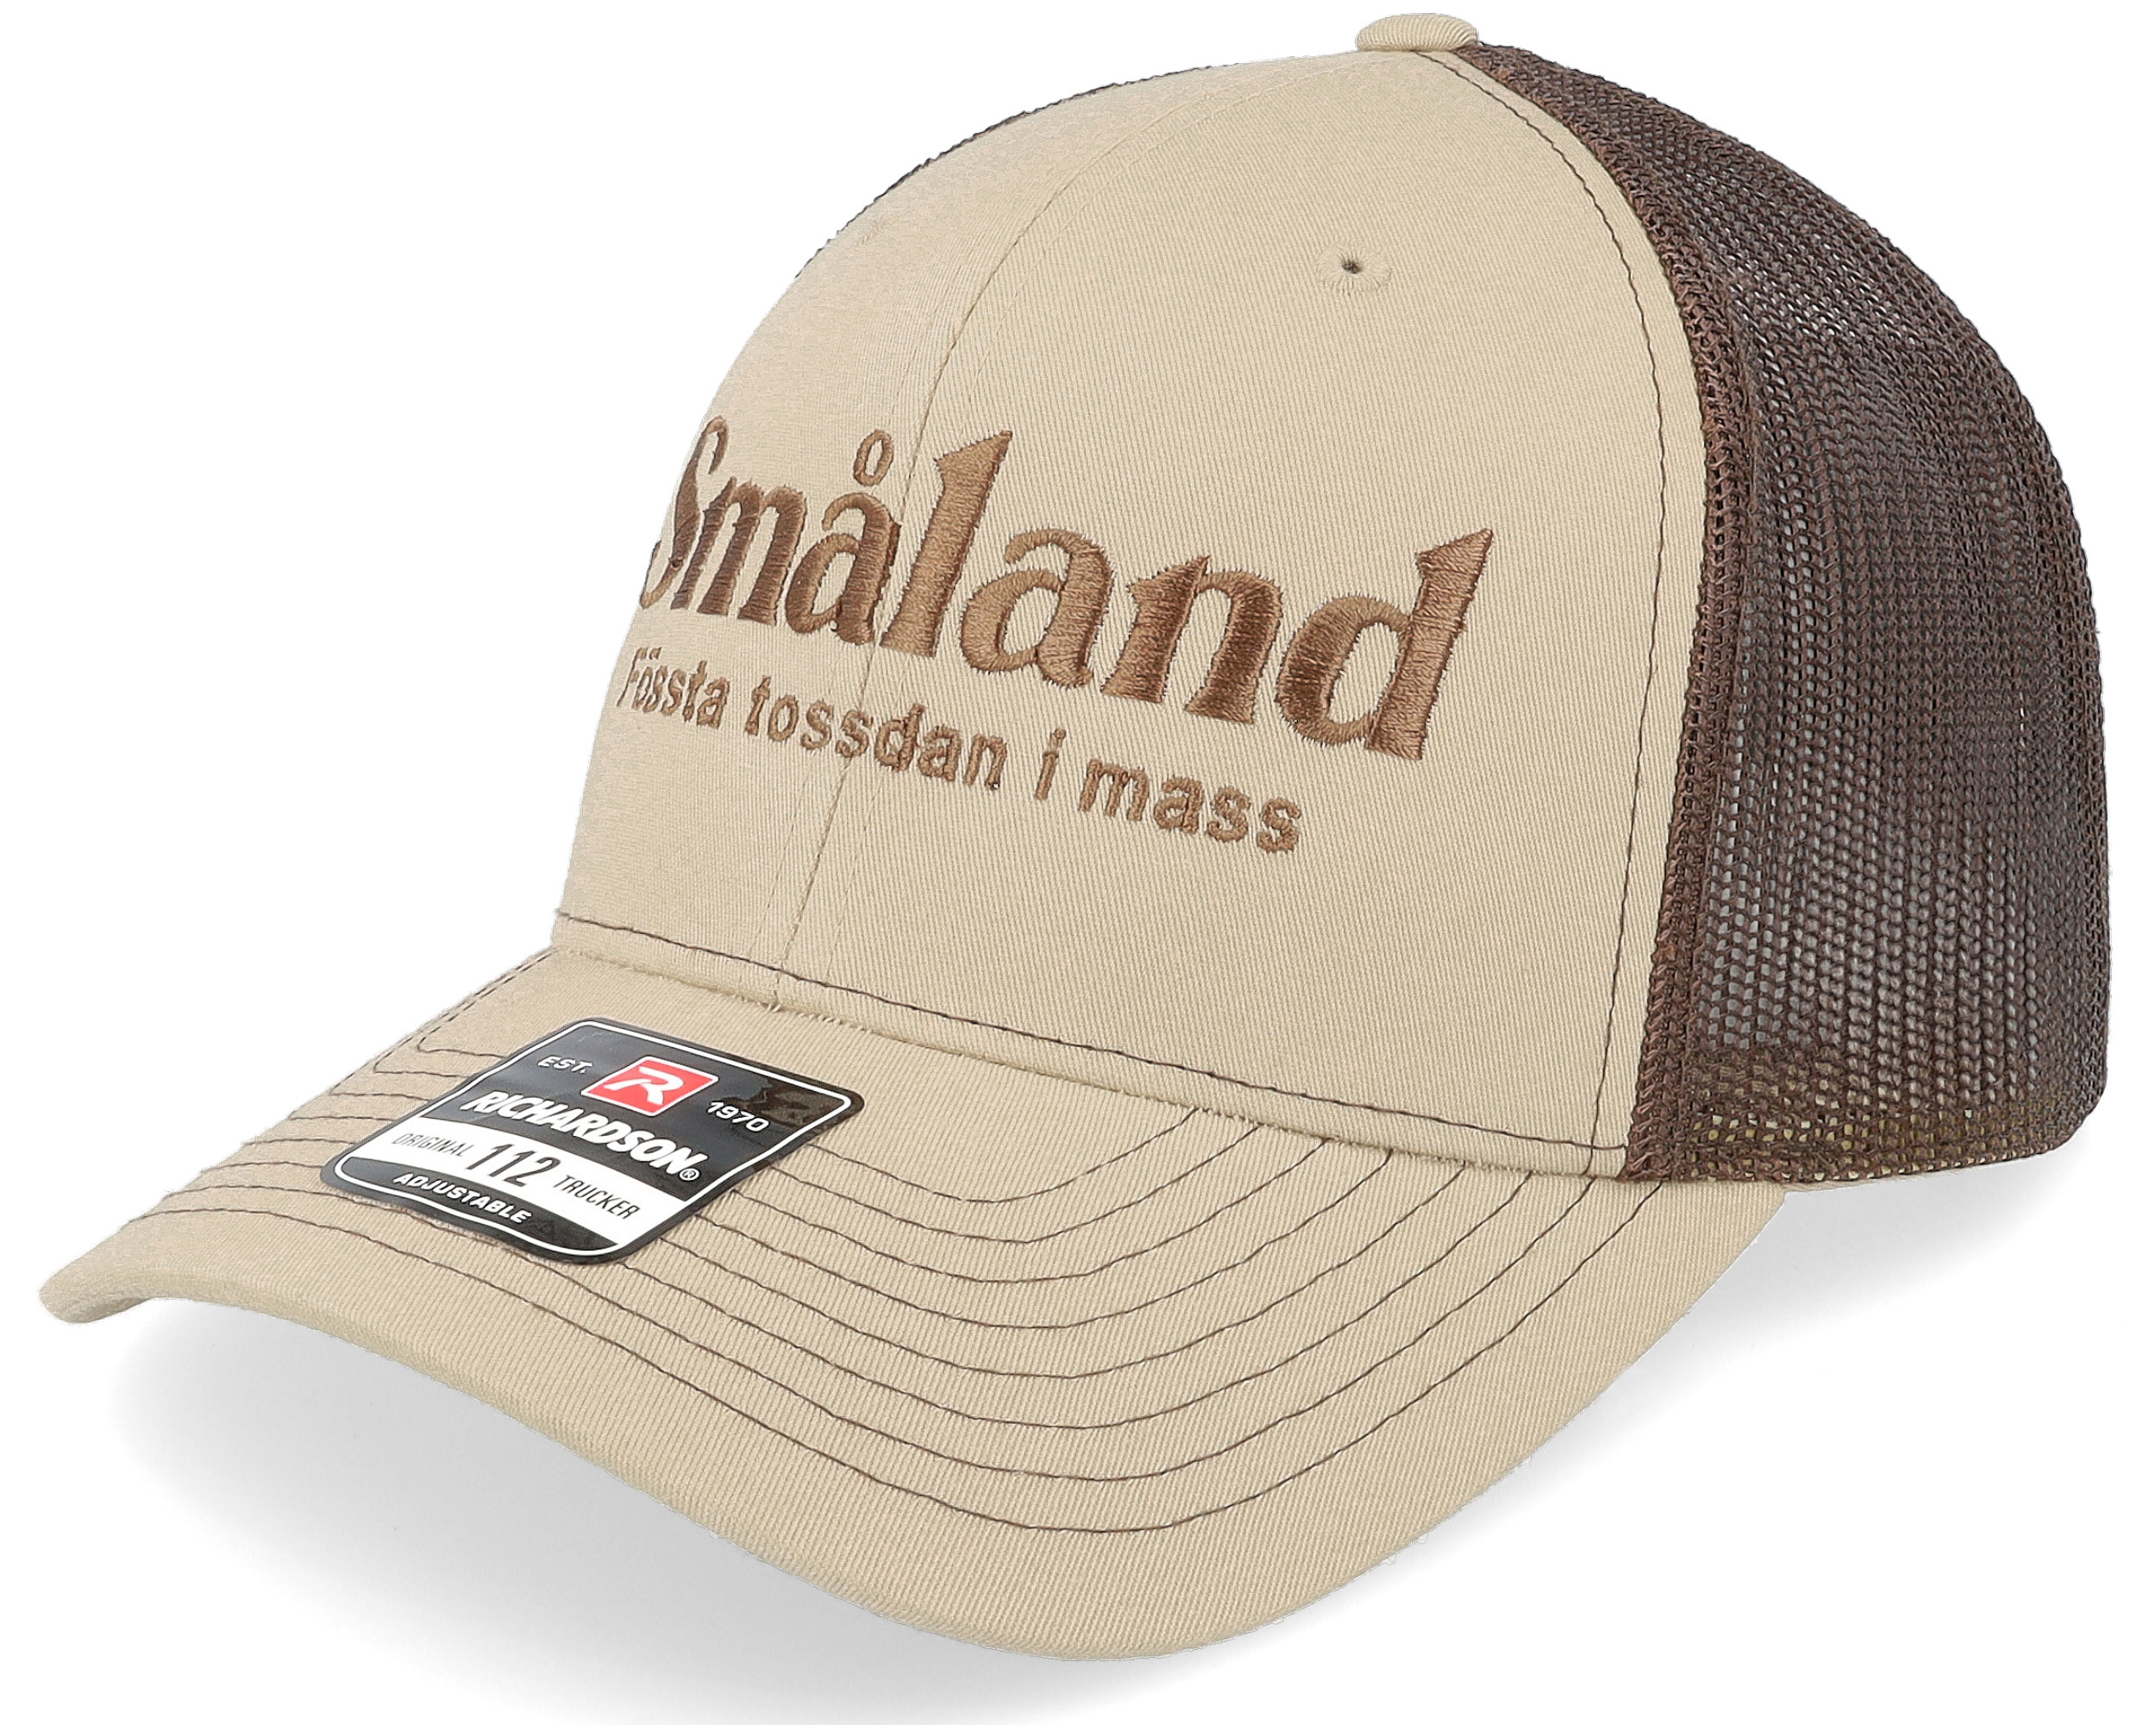 Trucker Tossdan Småland caps Iconic - I Khaki/Brown Mass Första